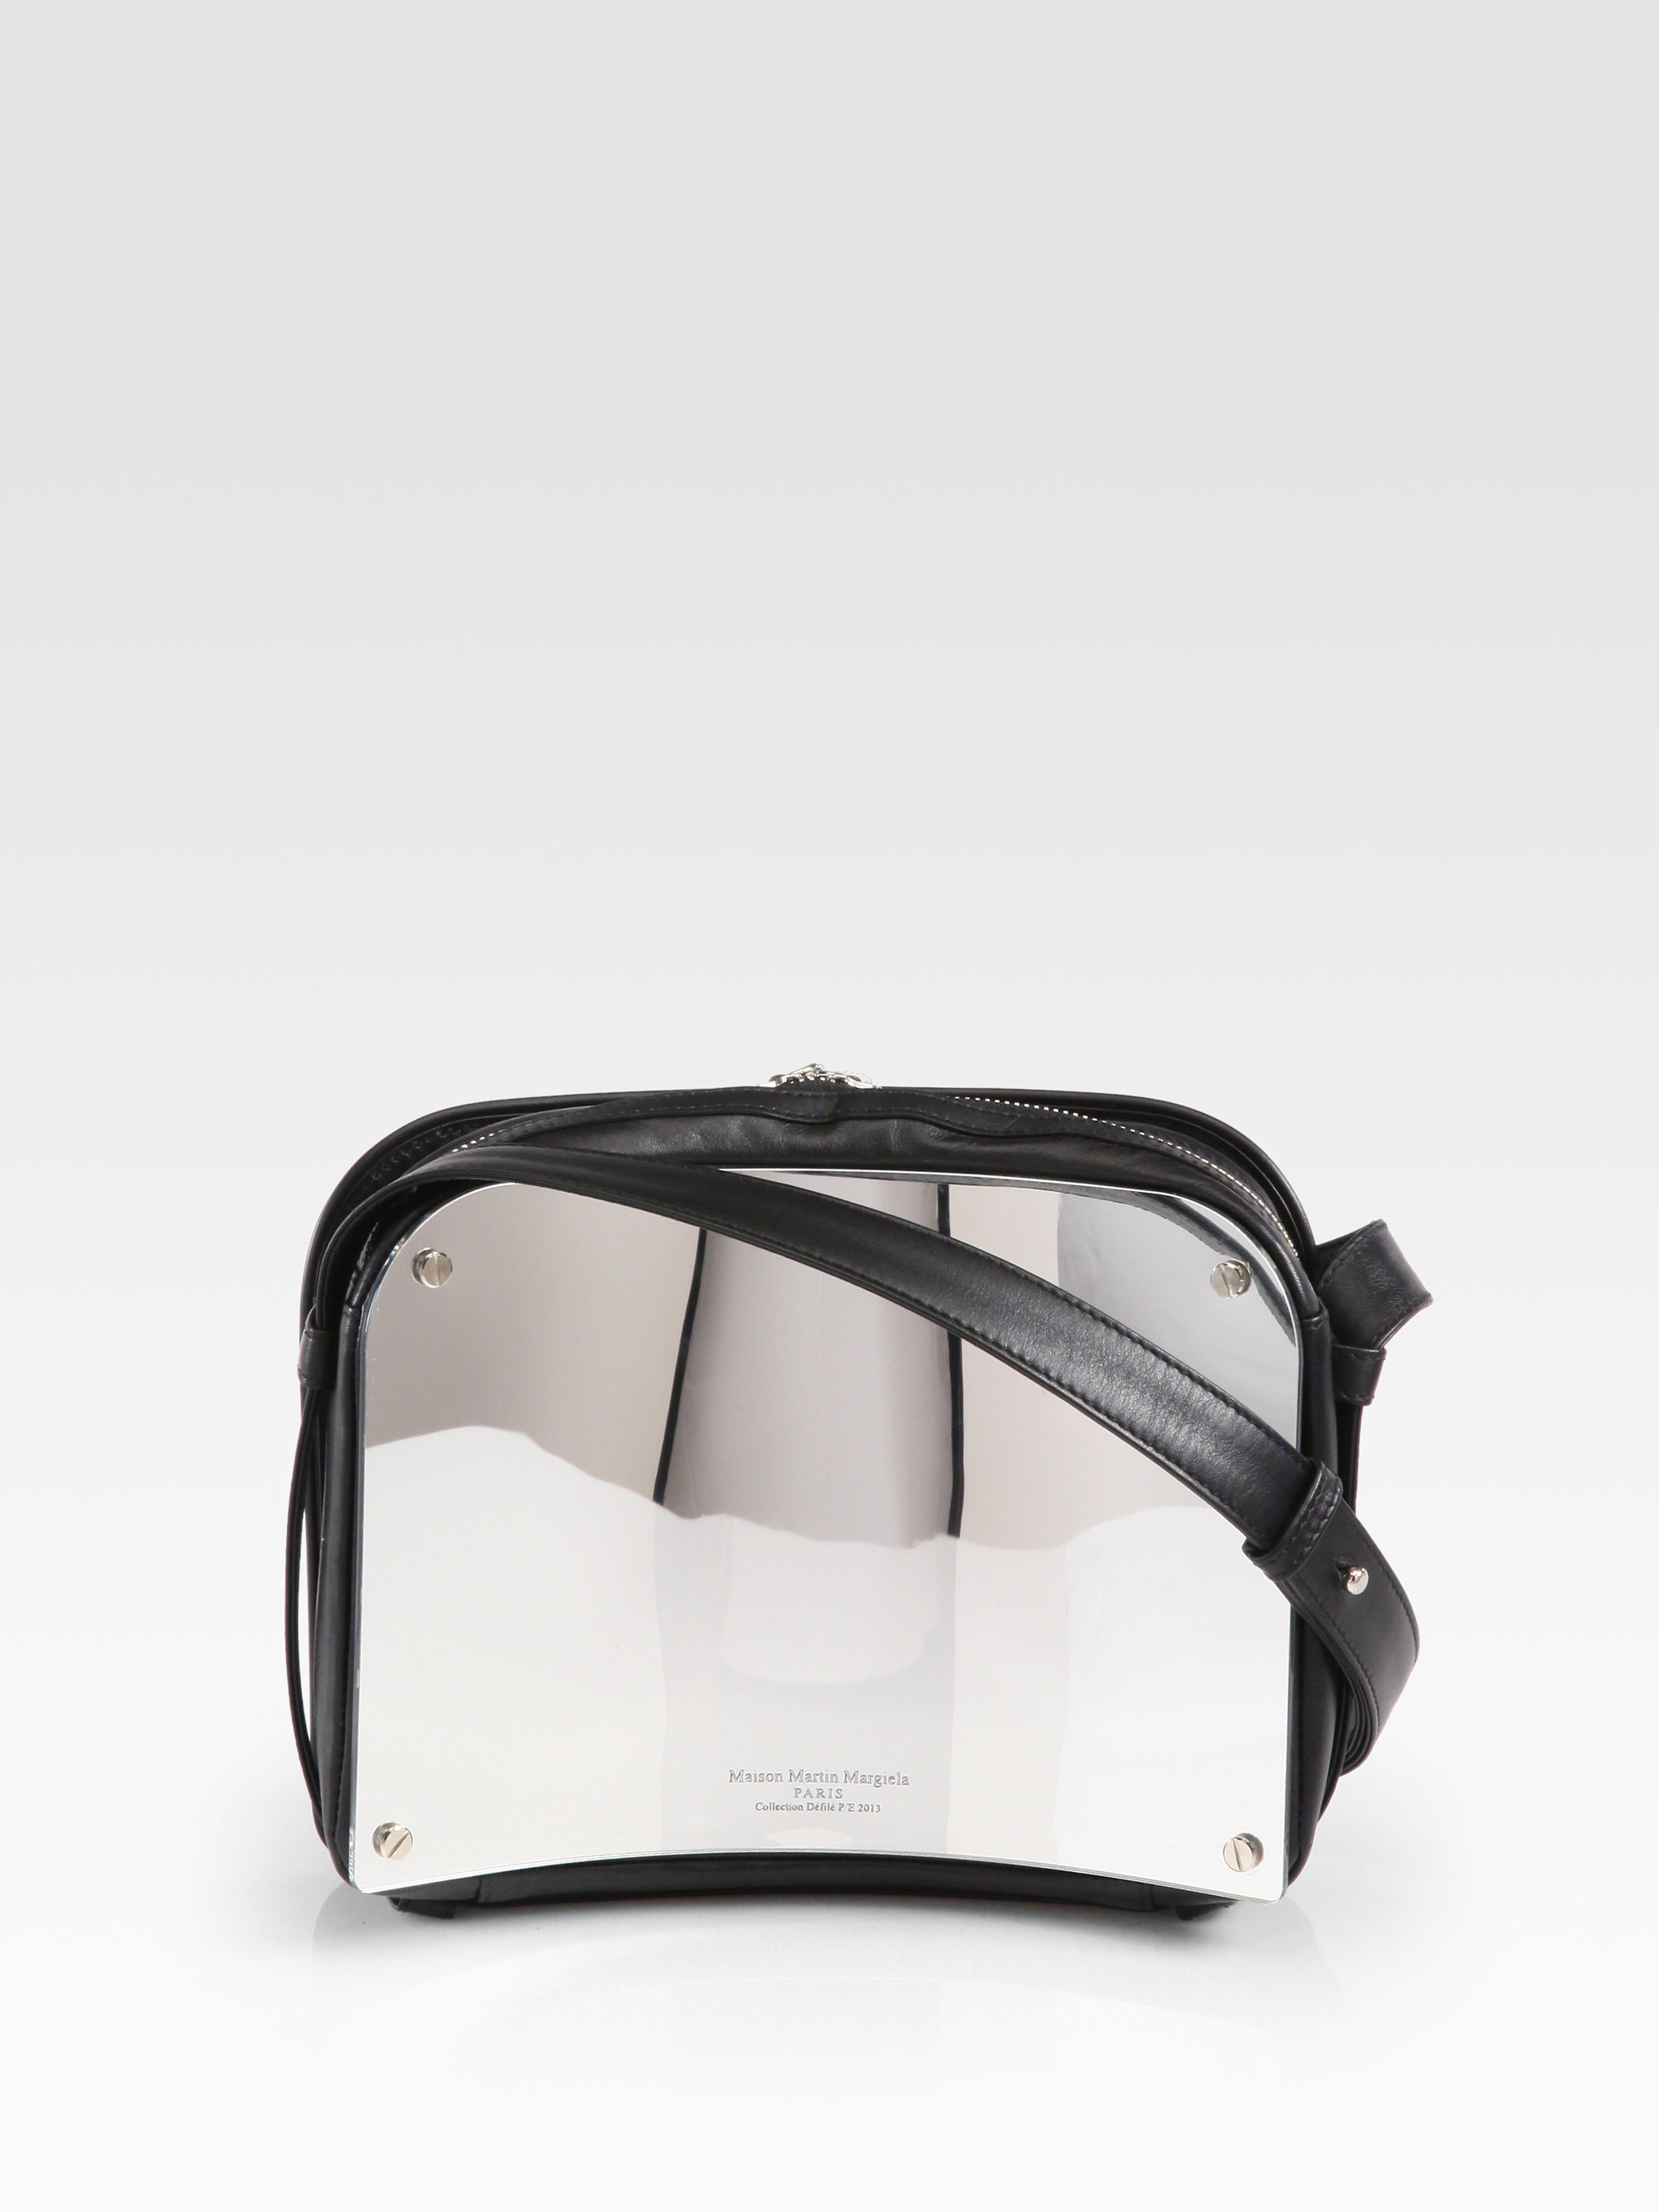 Maison Margiela Curved Mirrored Shoulder Bag in Black | Lyst